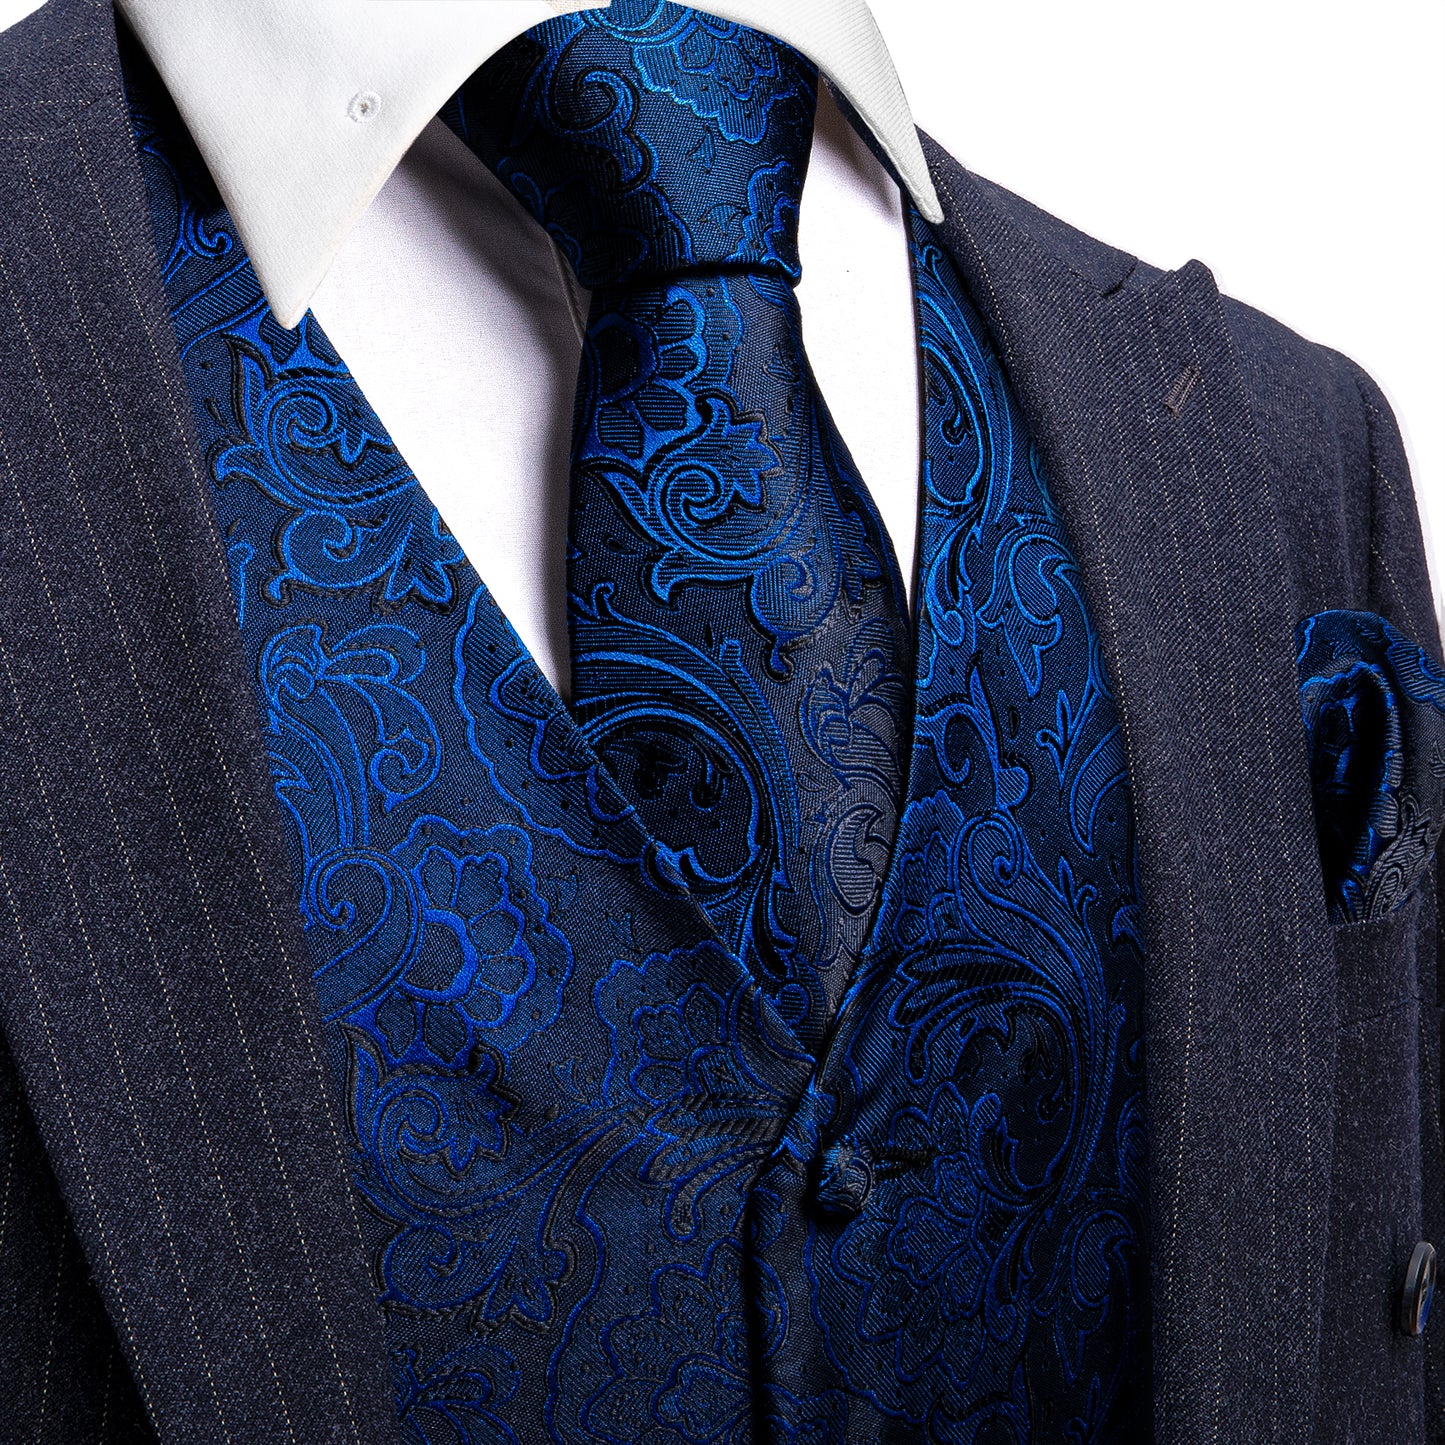 Designer Floral Waistcoat Silky Novelty Vest Paisley Blast Blue